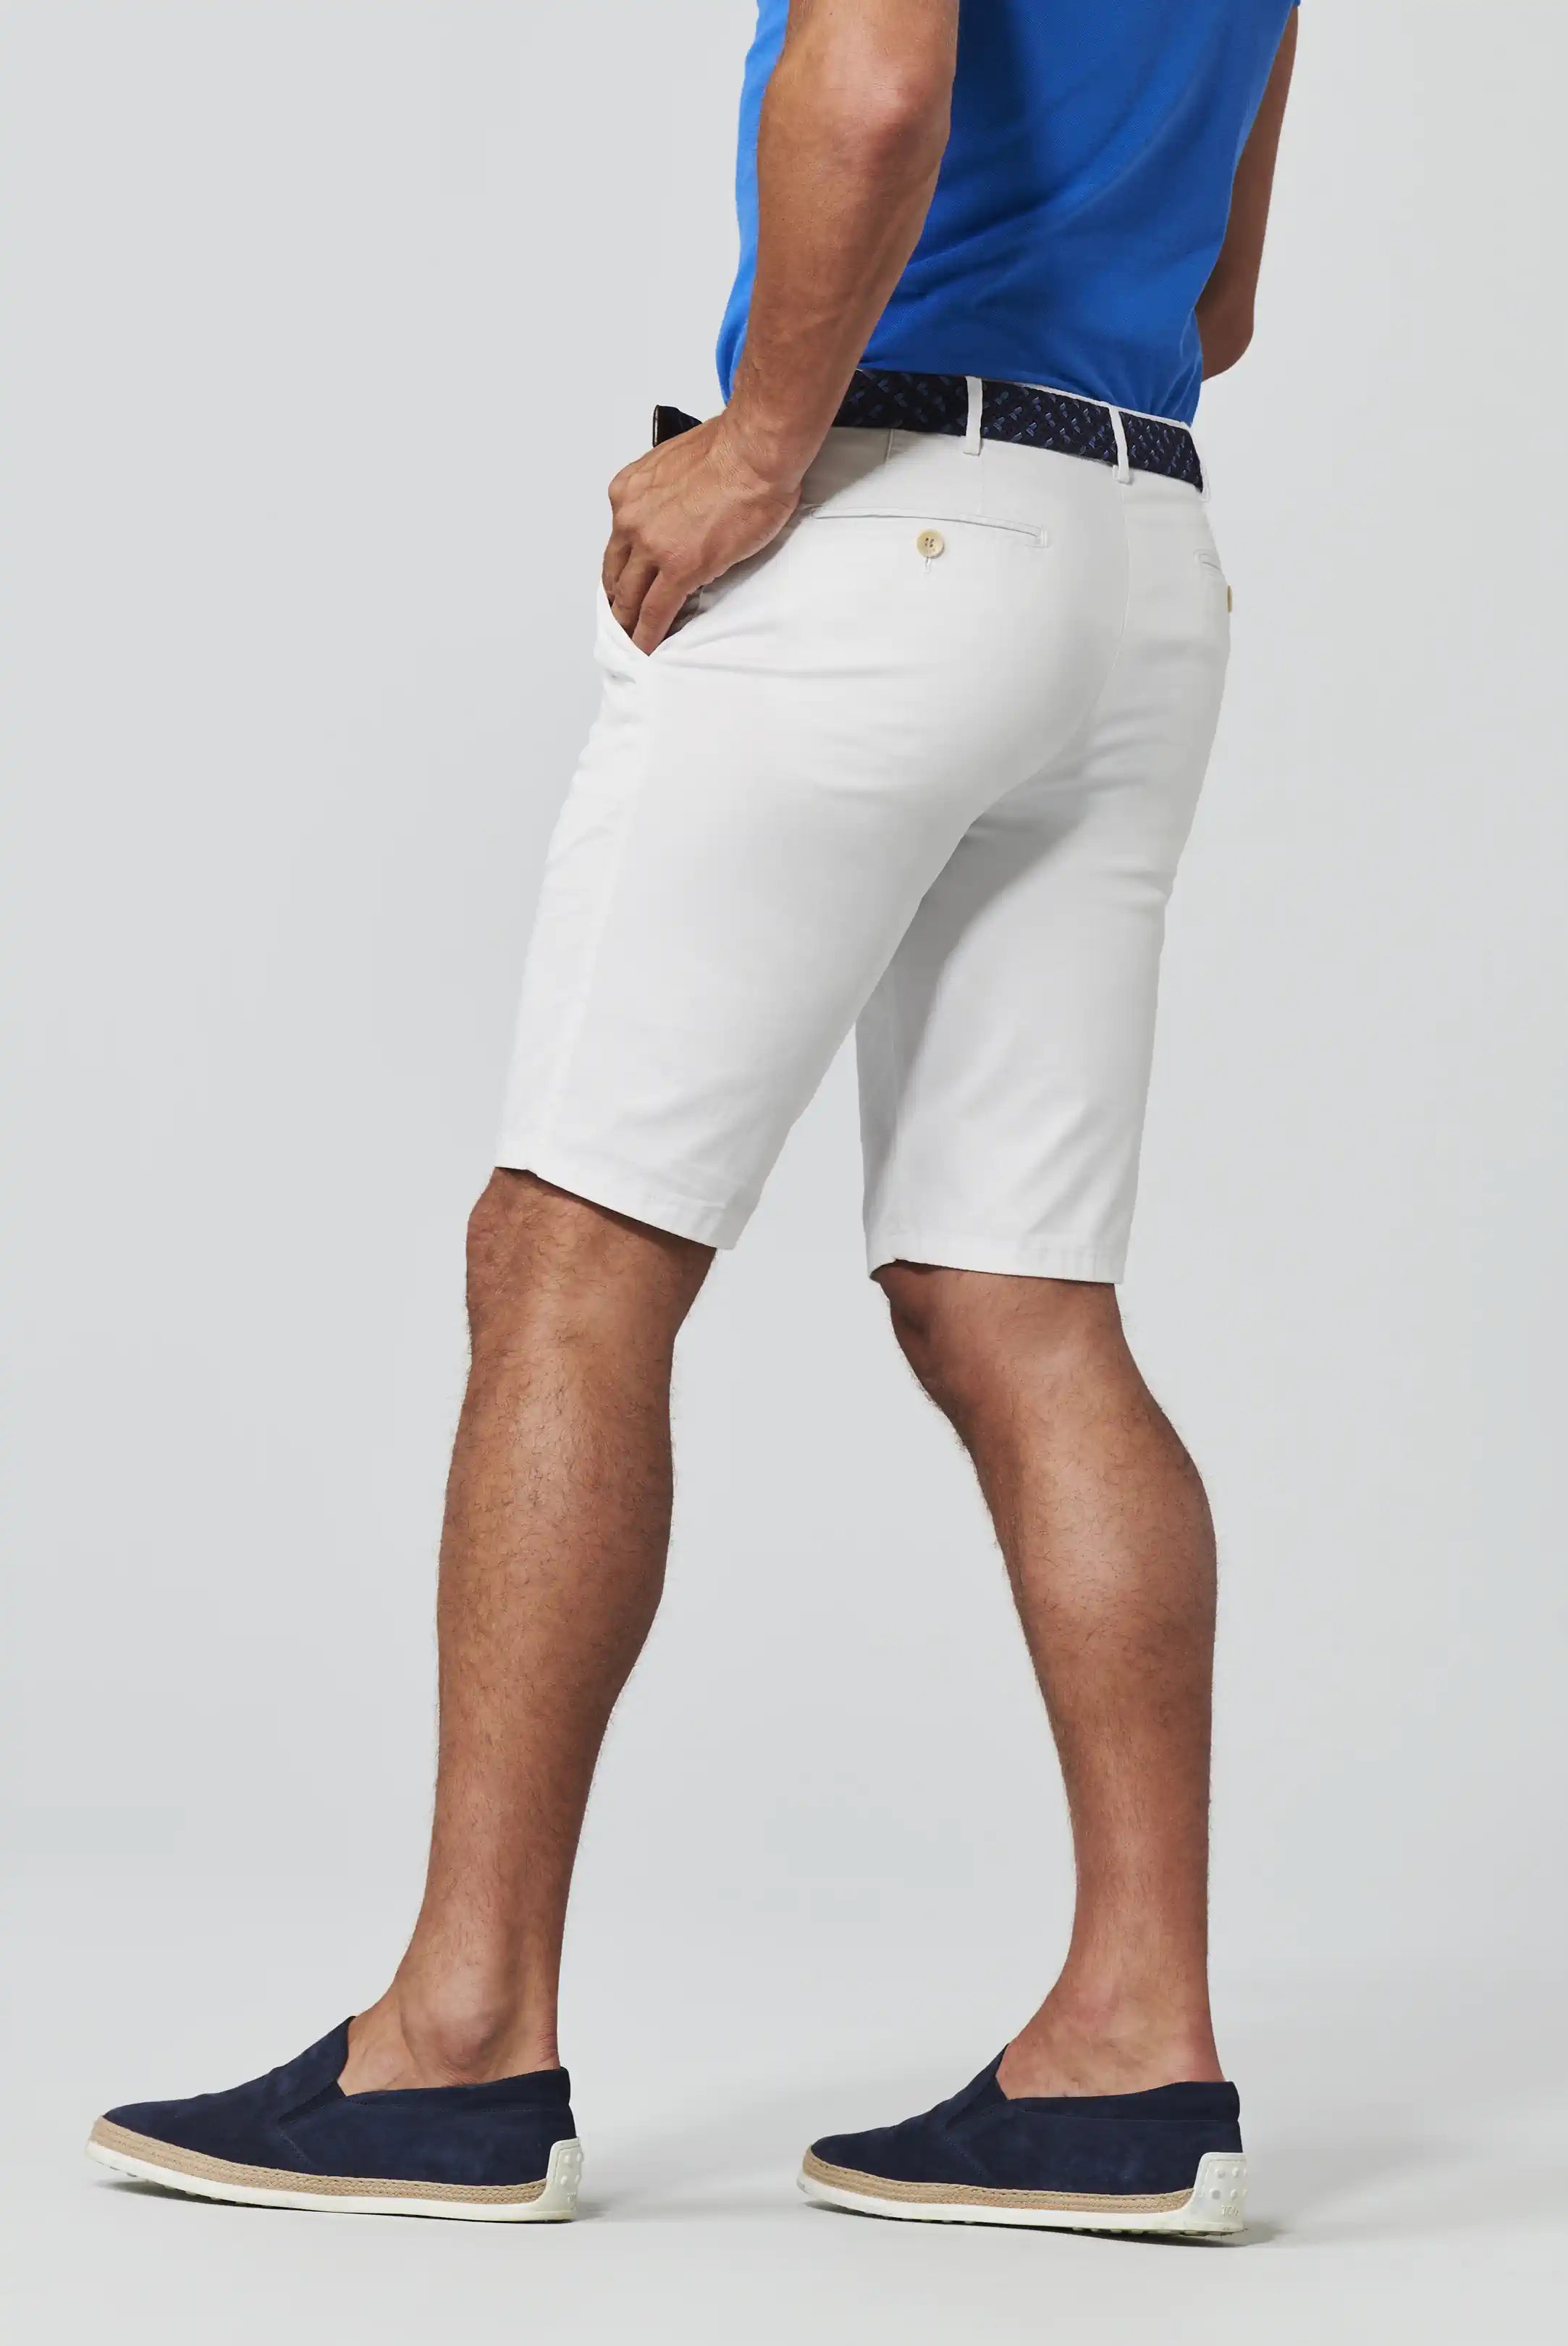 MEYER B-Palma Shorts - Men's Cotton Twill - White